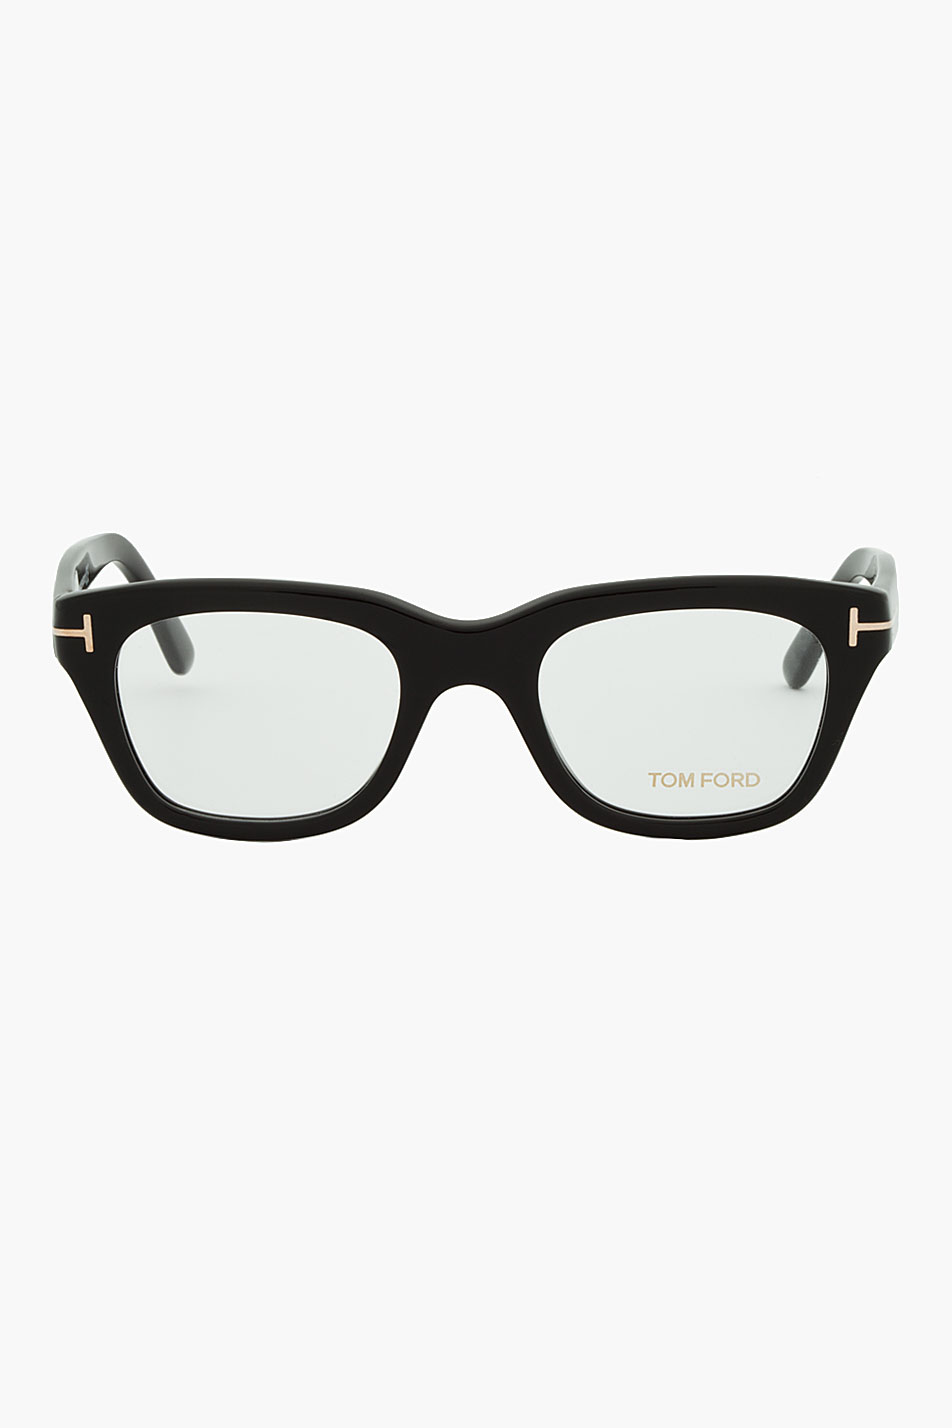 Top 65+ imagen mens glasses frames tom ford - Abzlocal.mx